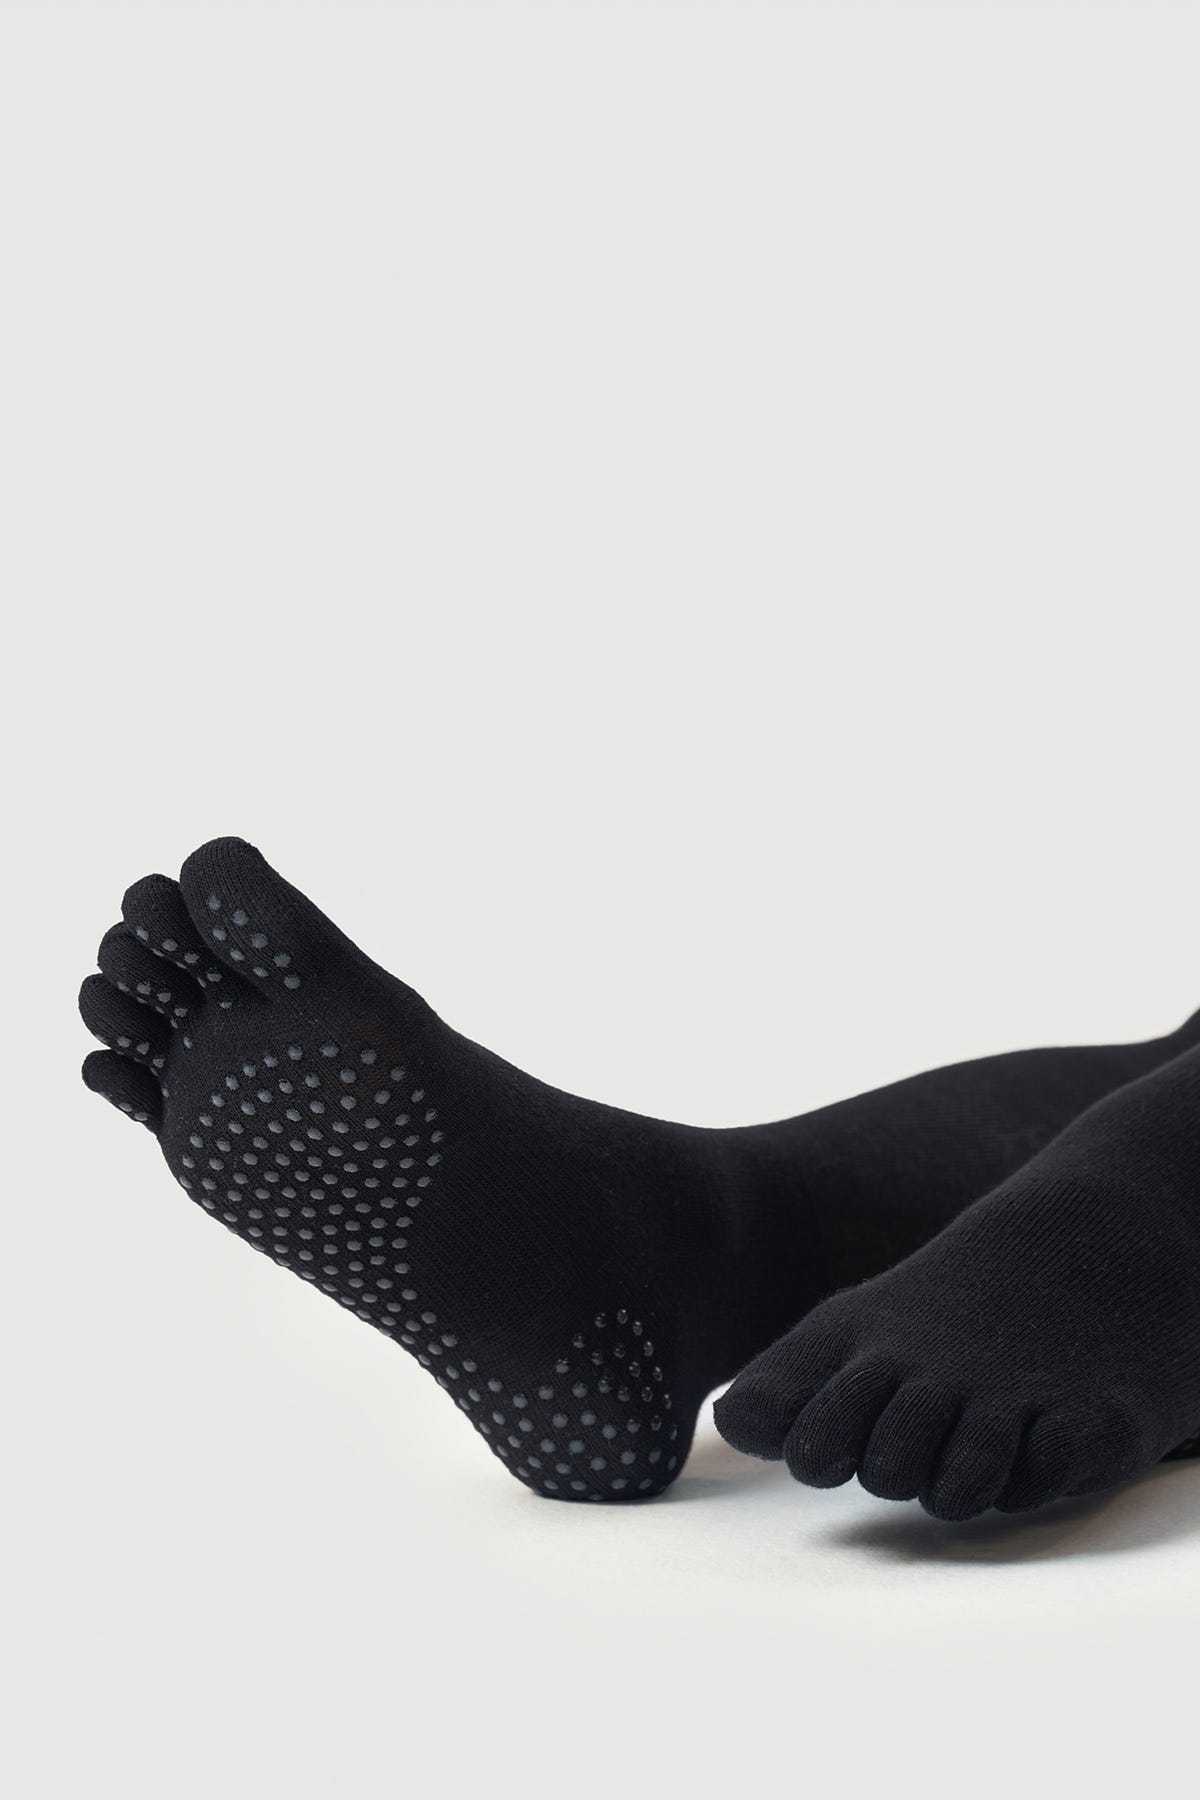 Tip Toes Pilates Barre Yoga Socks